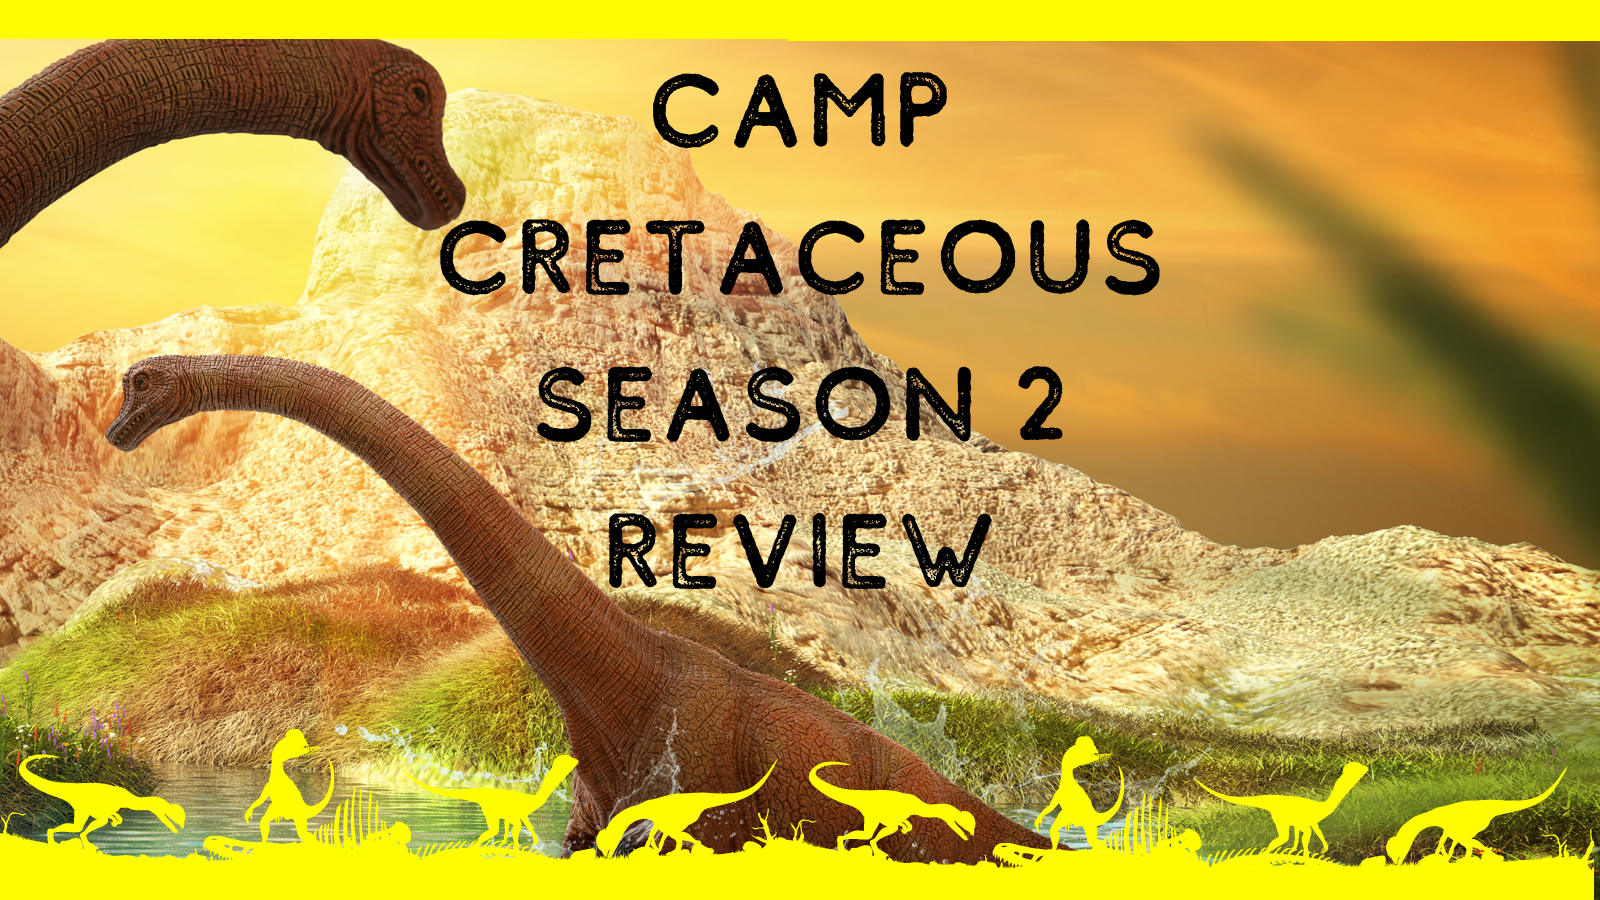 Camp Cretaceous season 2 review